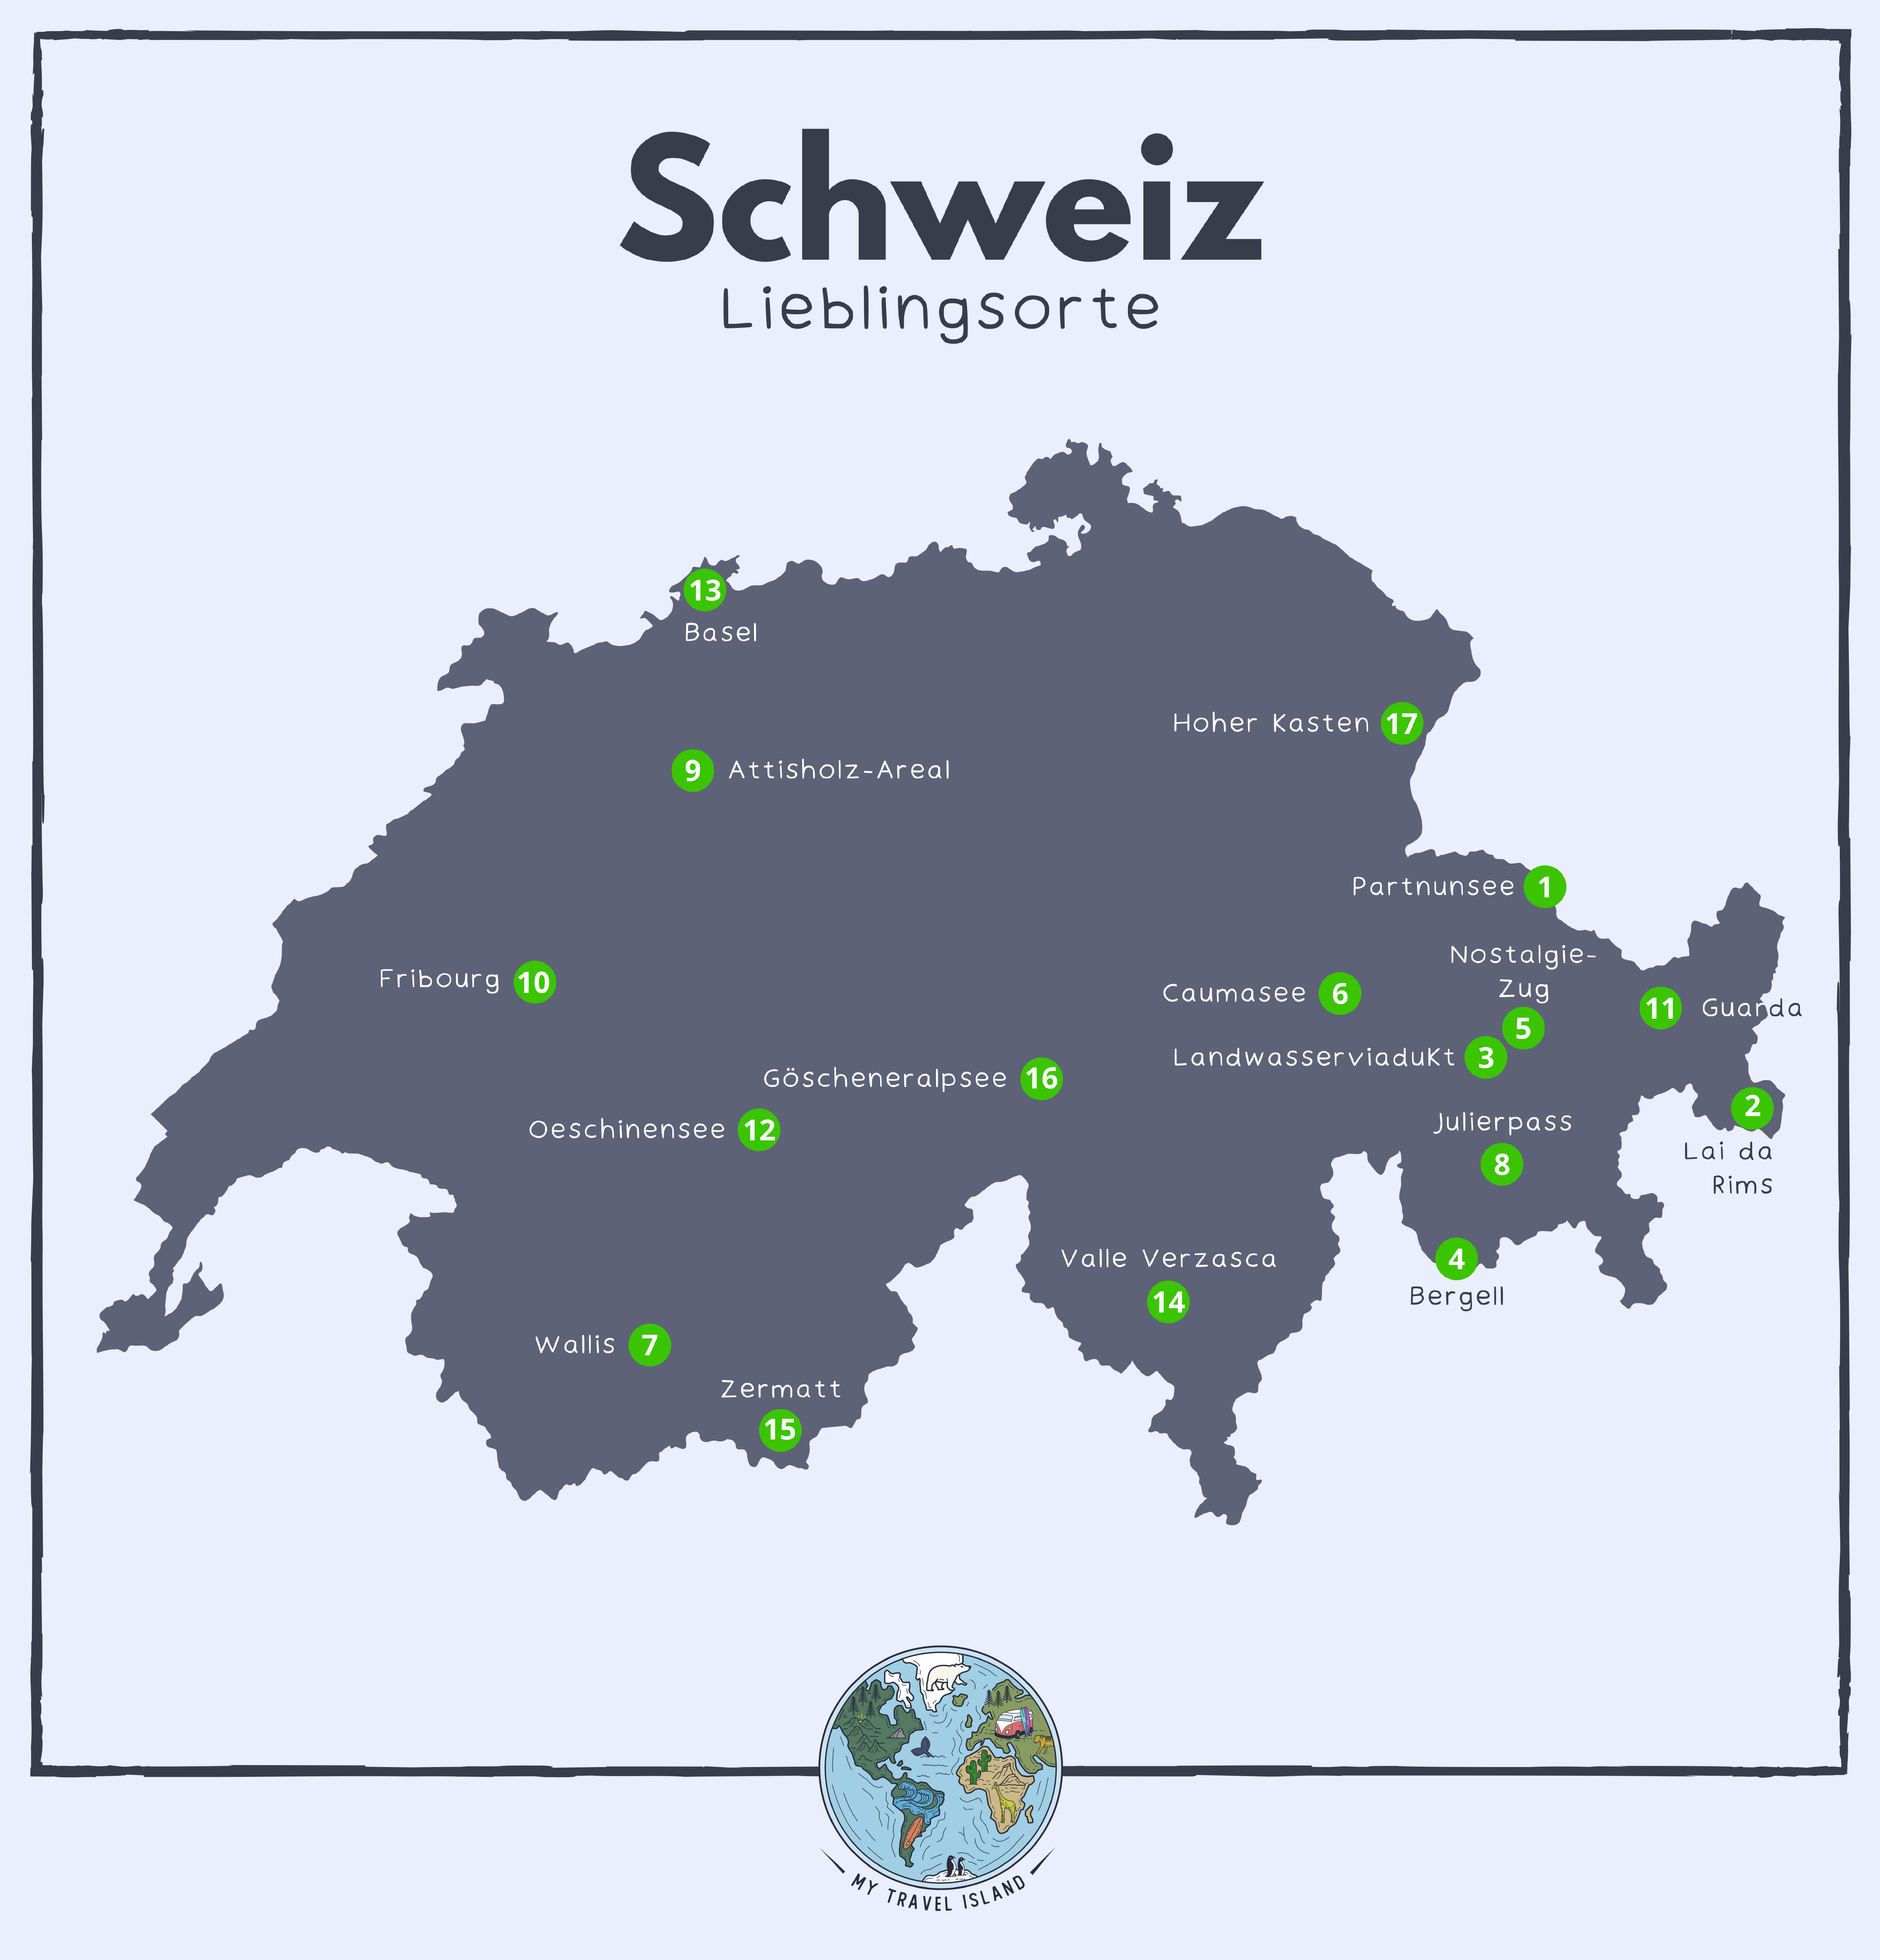 Schweiz Roadtrip - Lieblingsorte - Map 
© Marielle Janotta - My Travel Island